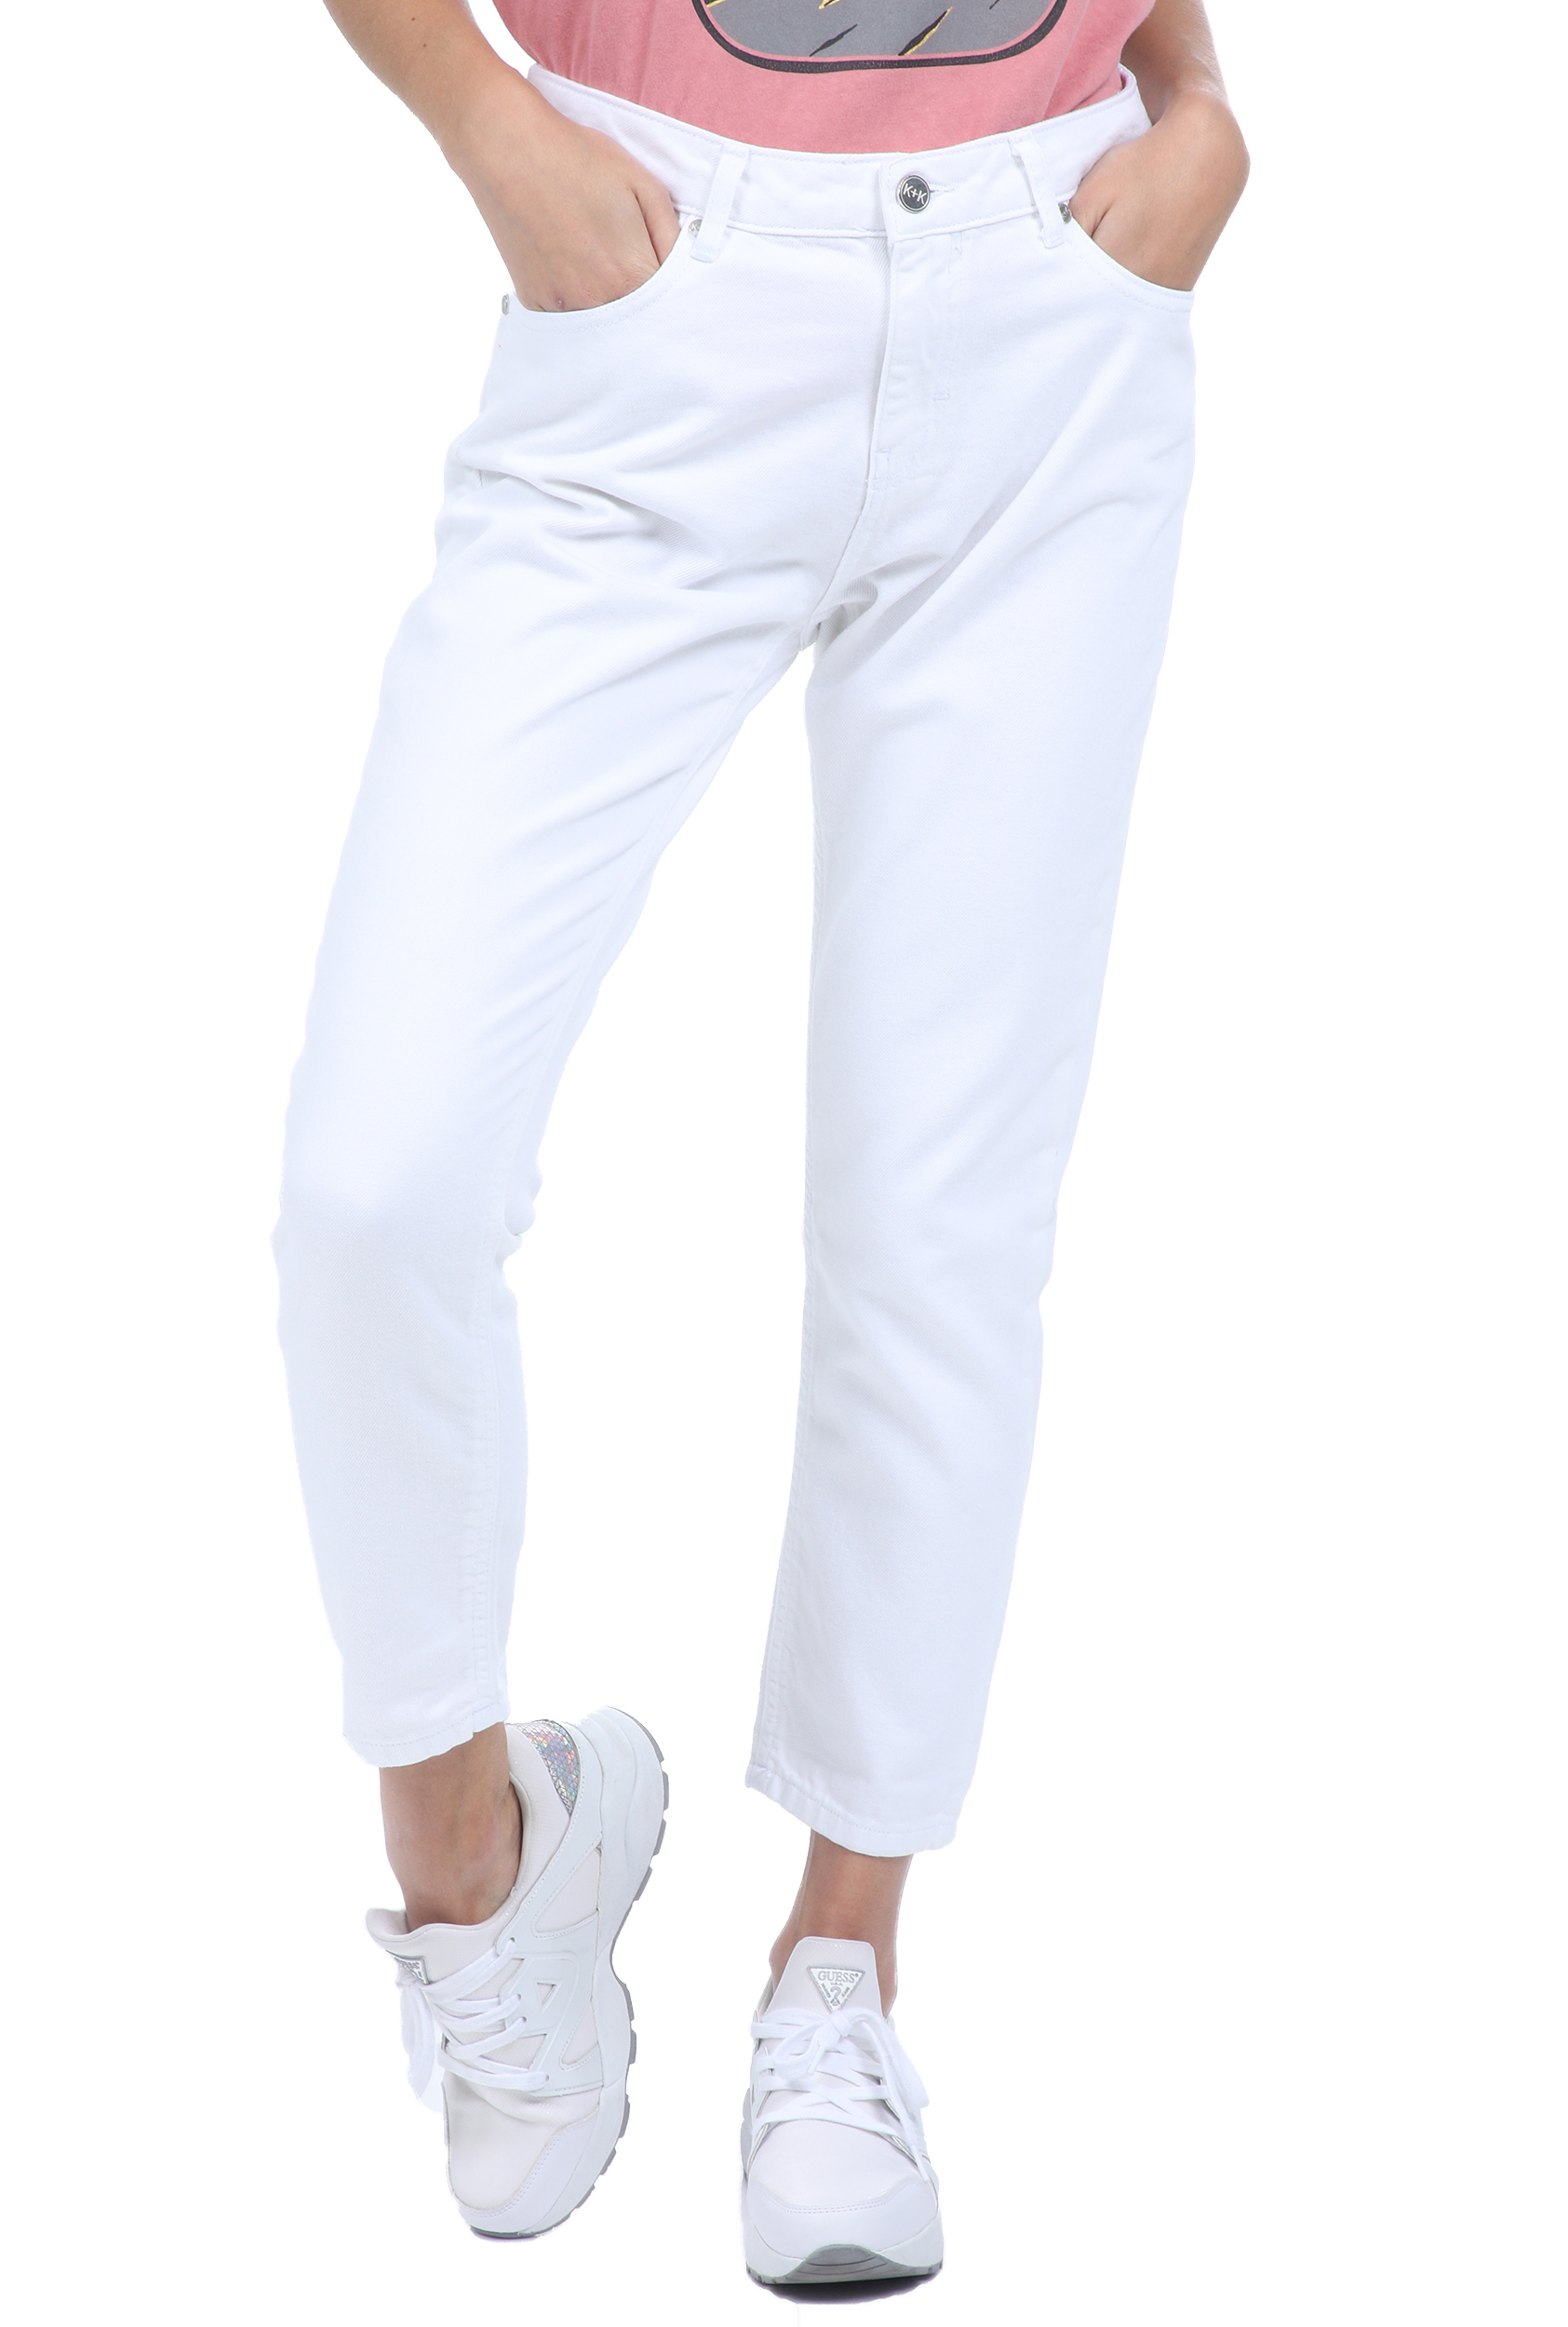 KENDALL + KYLIE – Γυναικειο jean παντελονι KENDALL + KYLIE λευκο